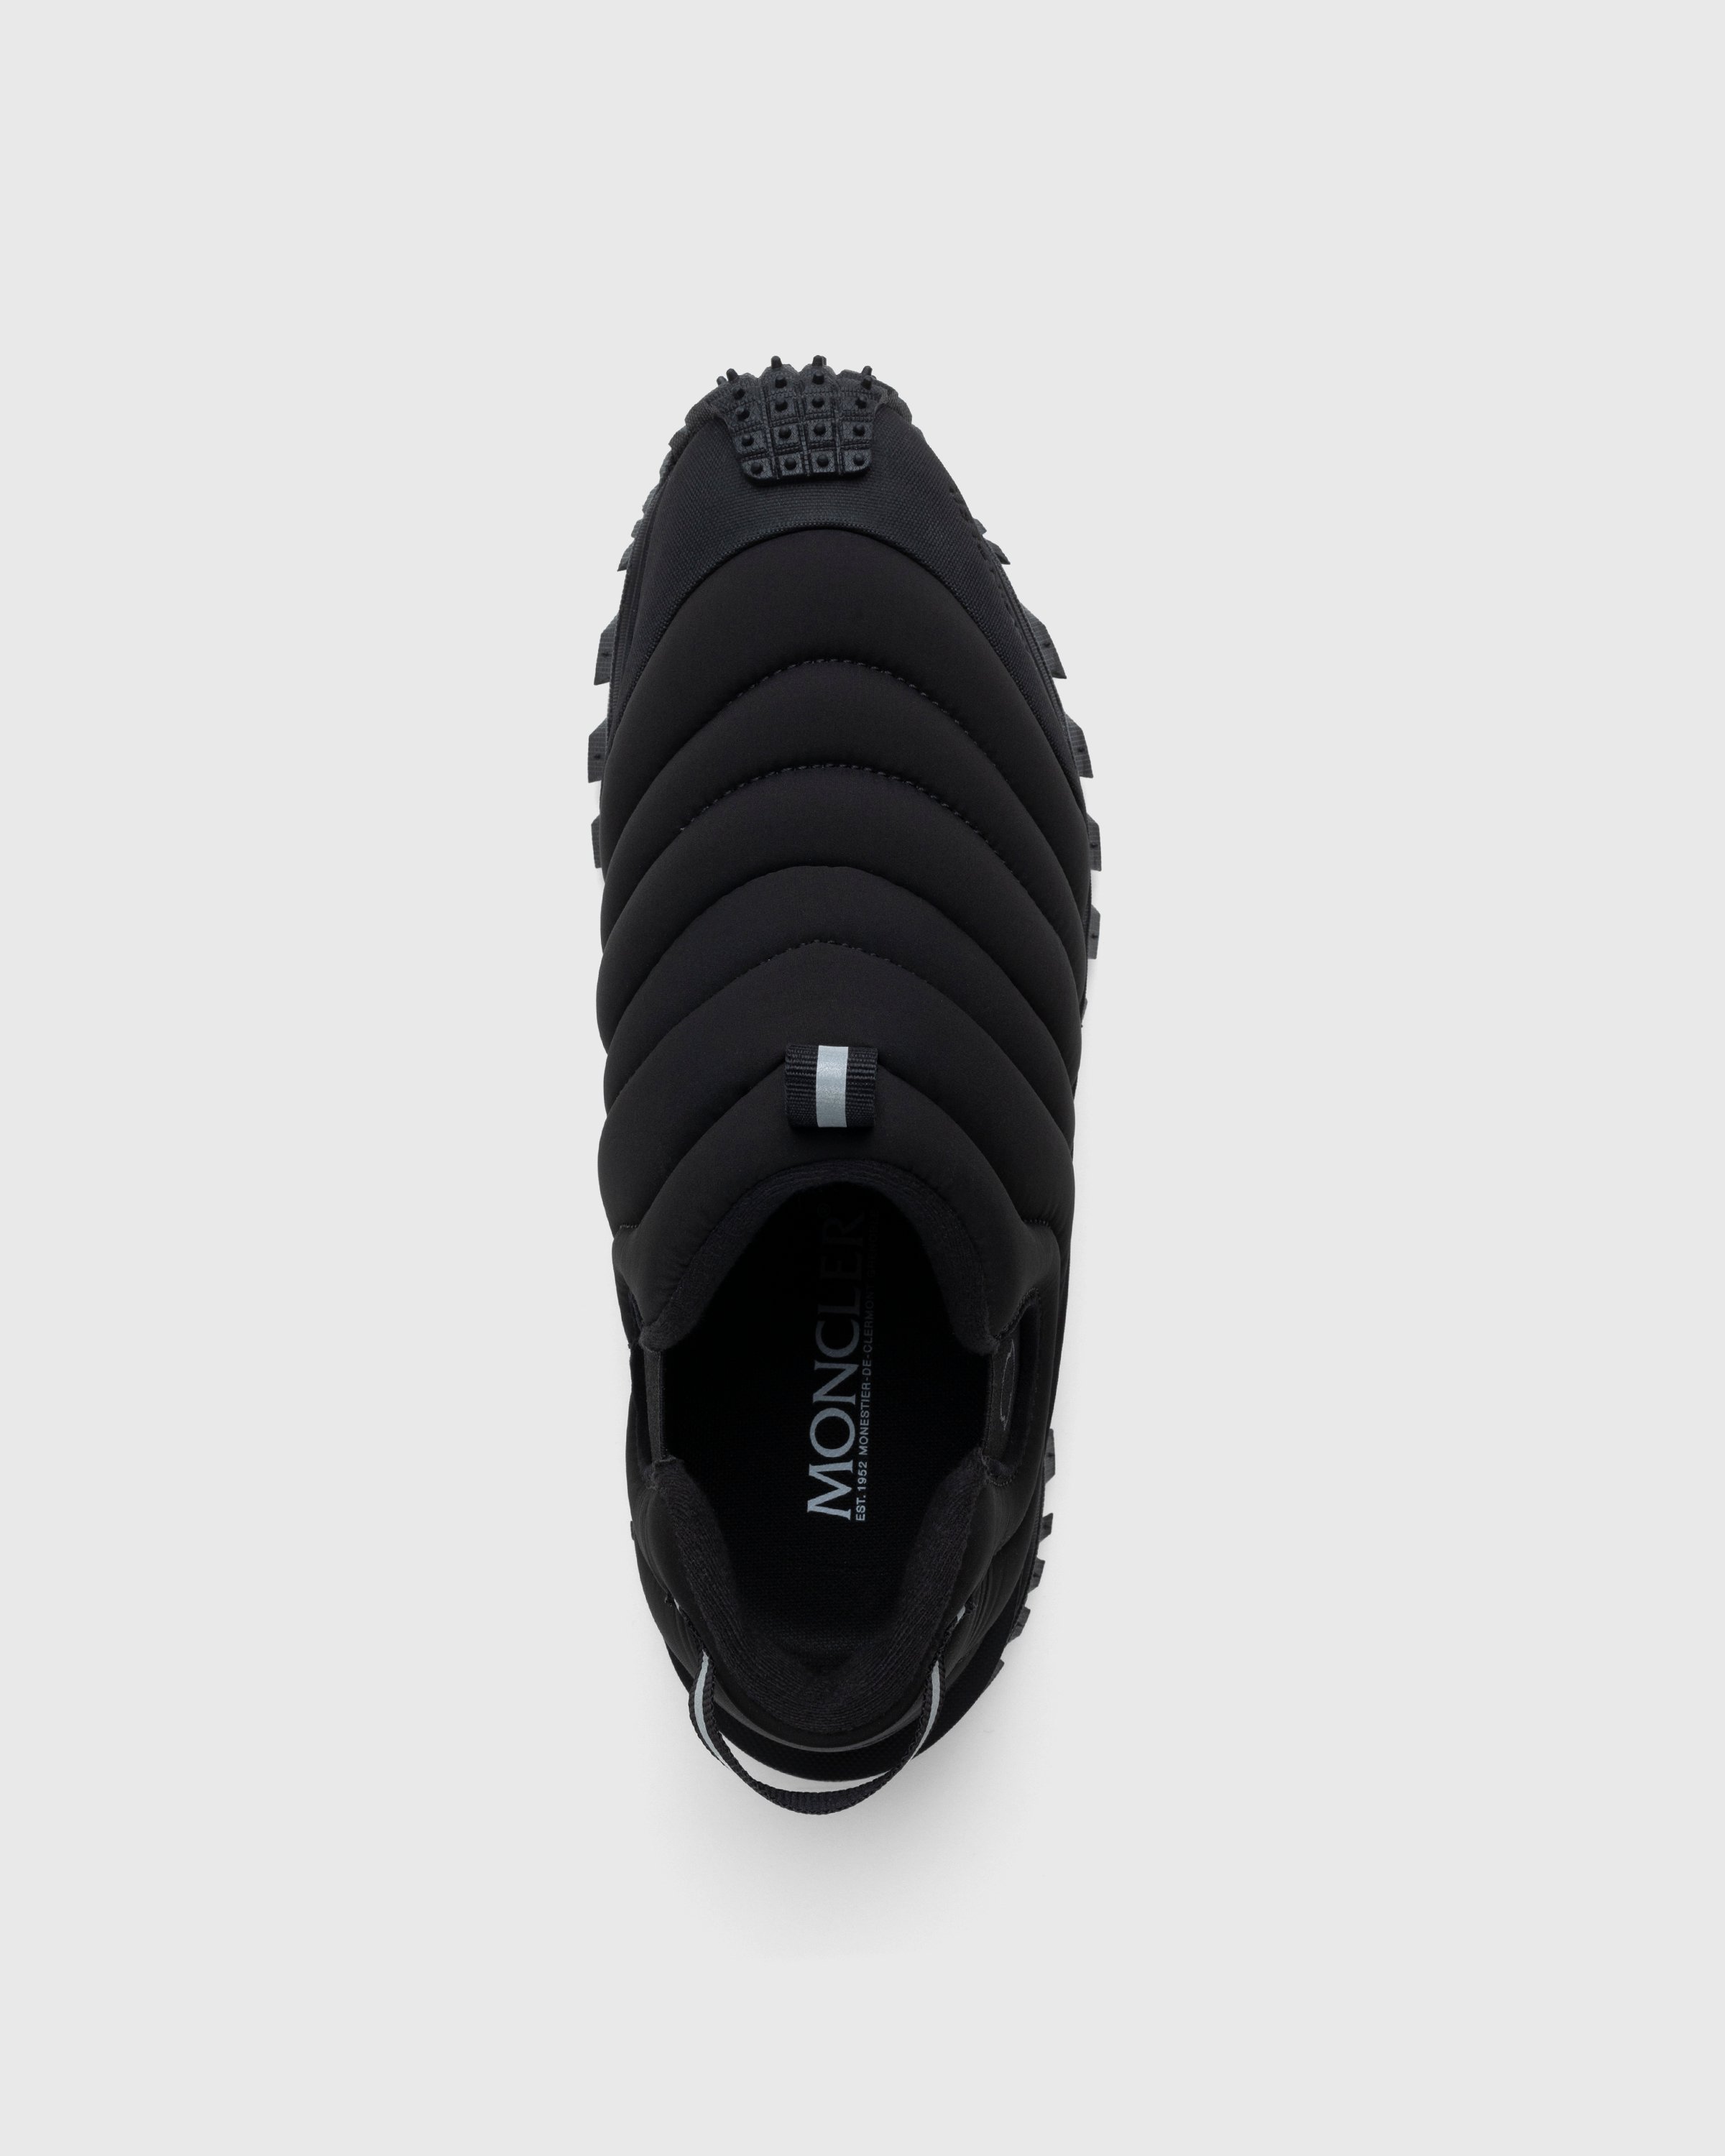 Moncler - Après Trail Sneakers Black - Footwear - Black - Image 5